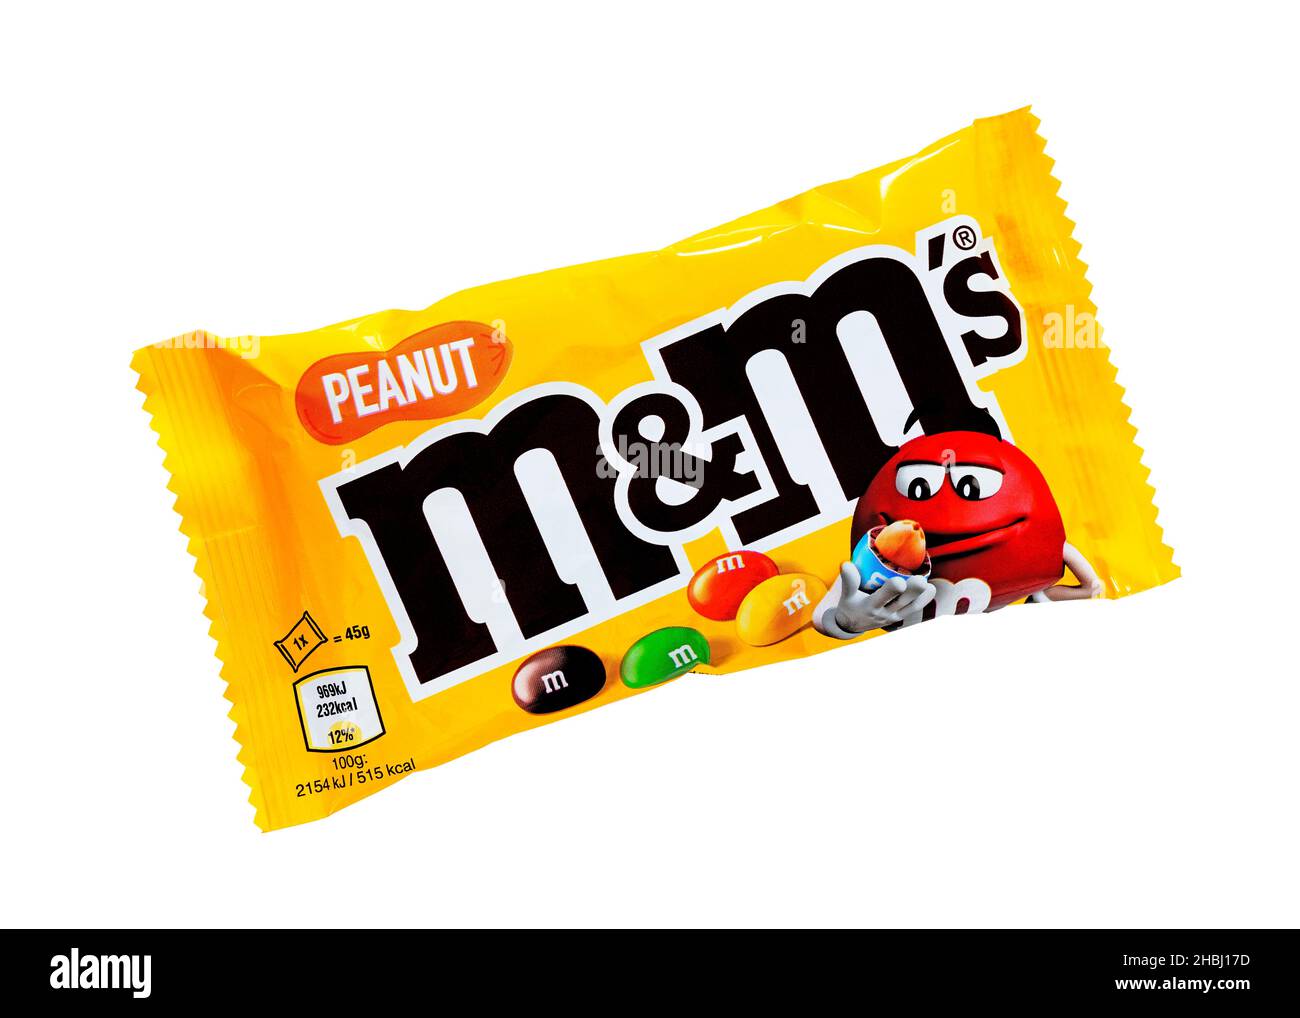 Peanut M&M's, United Kingdom Stock Photo